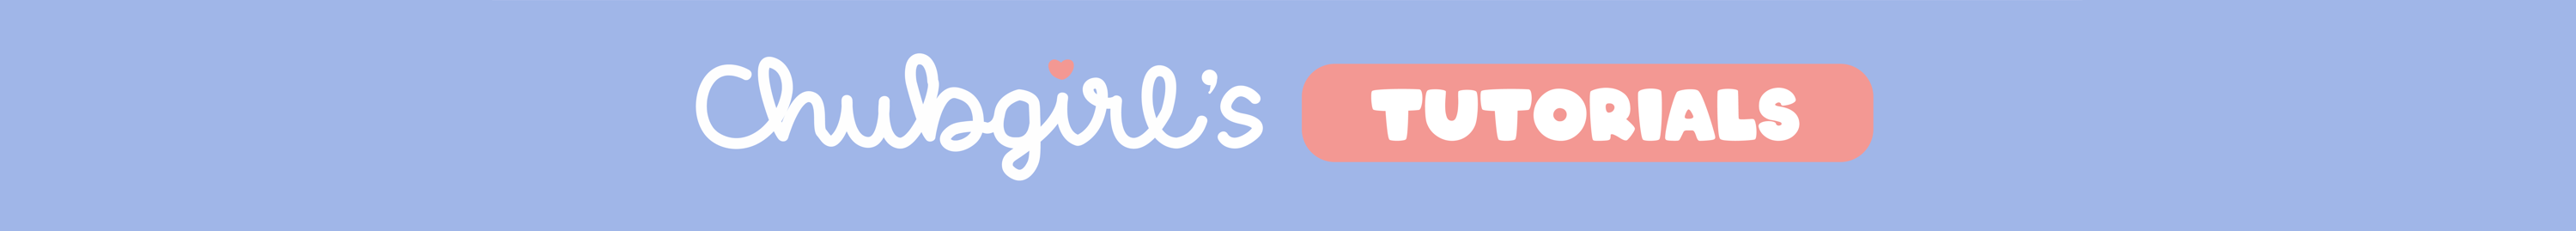 Chubgirl's tutorials logo